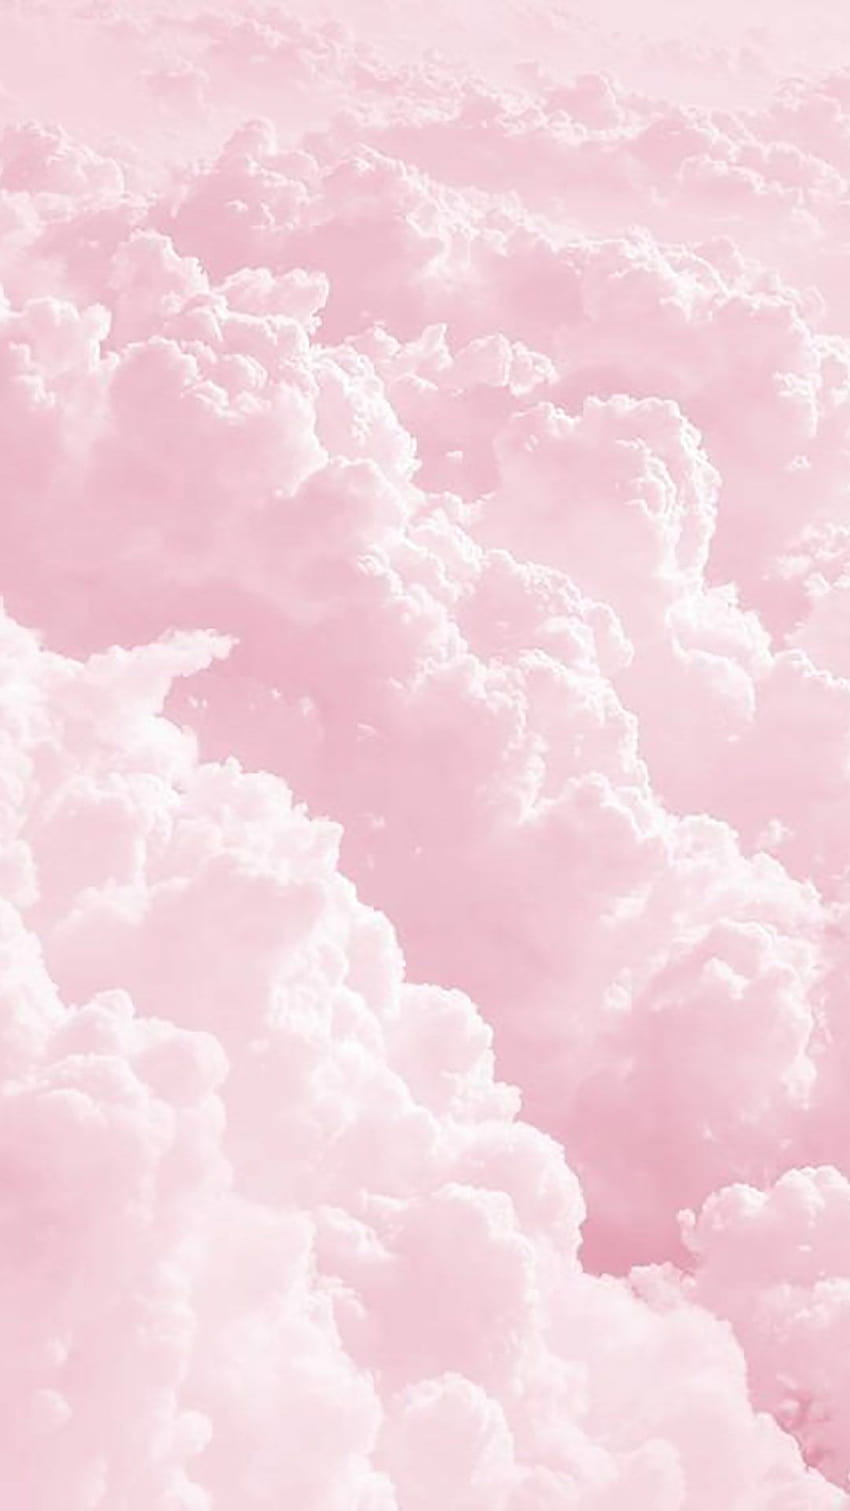 Awan Merah Muda Lucu, awan imut wallpaper ponsel HD